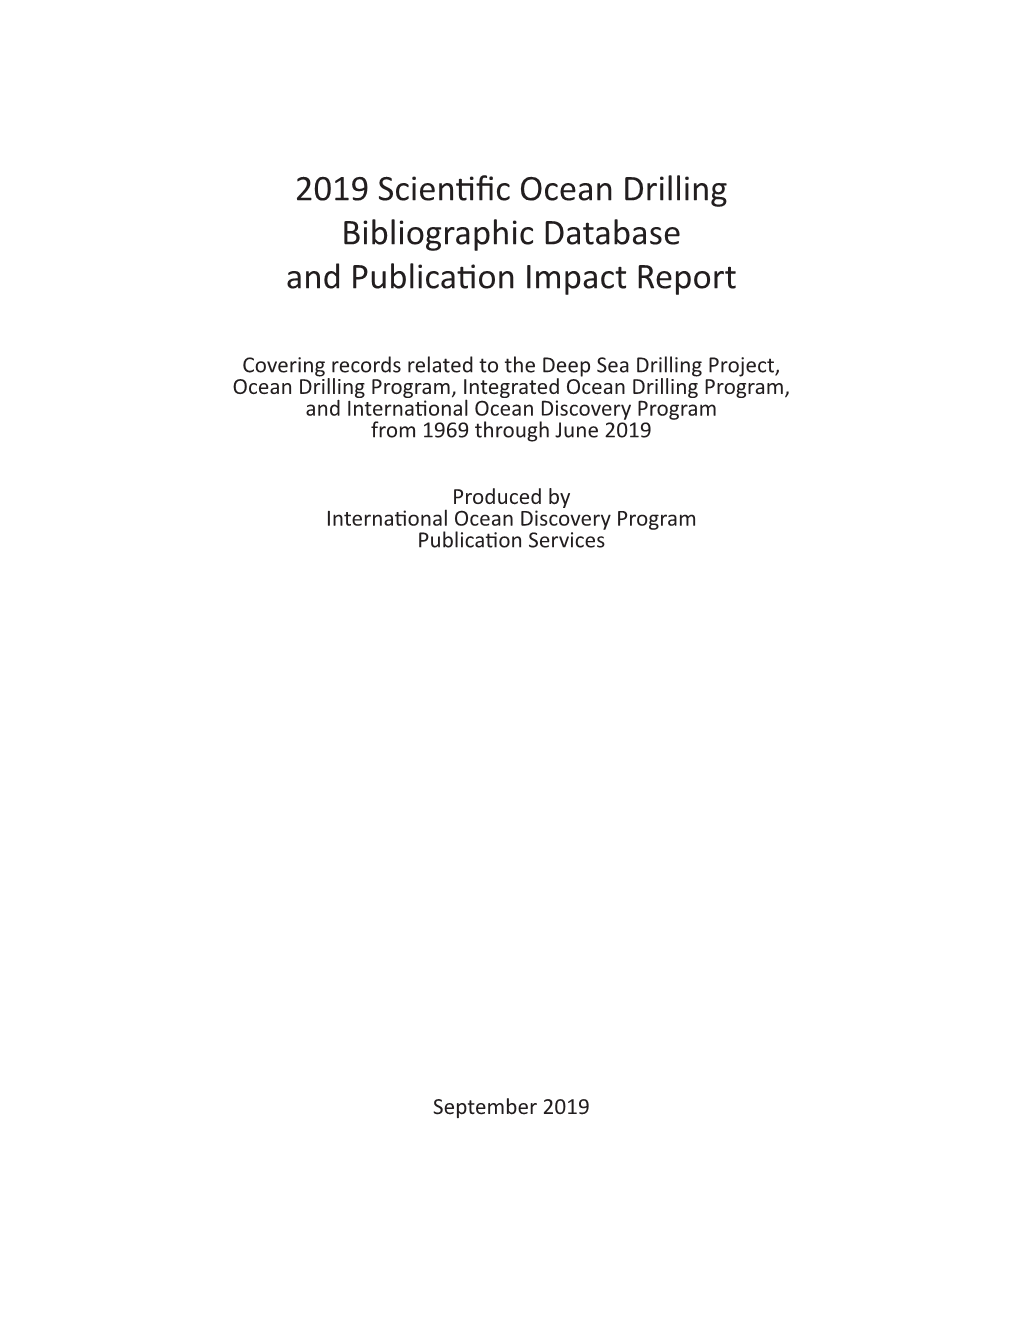 2019 Scientific Ocean Drilling Bibliographic Database and Publication Impact Report